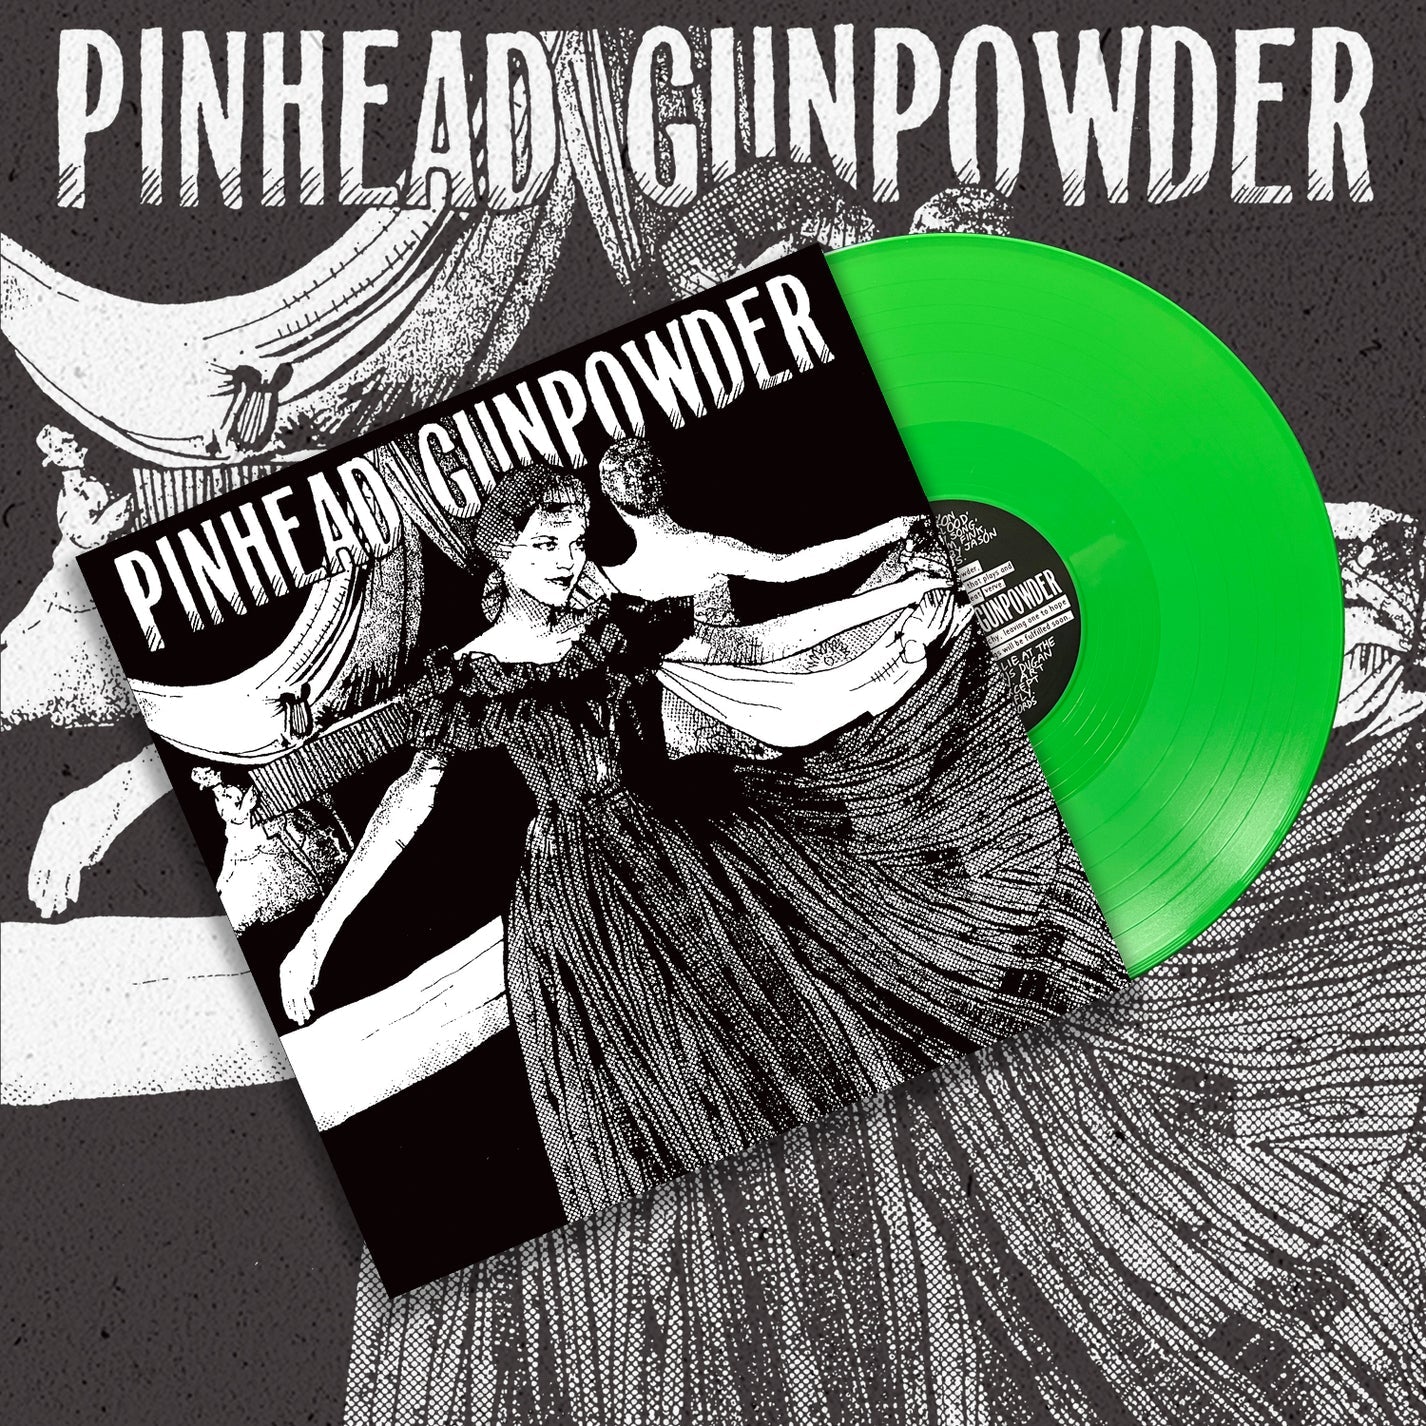 PINHEAD GUNPOWDER • Compulsive Disclosure (Green Vinyl, Reissue) • LP